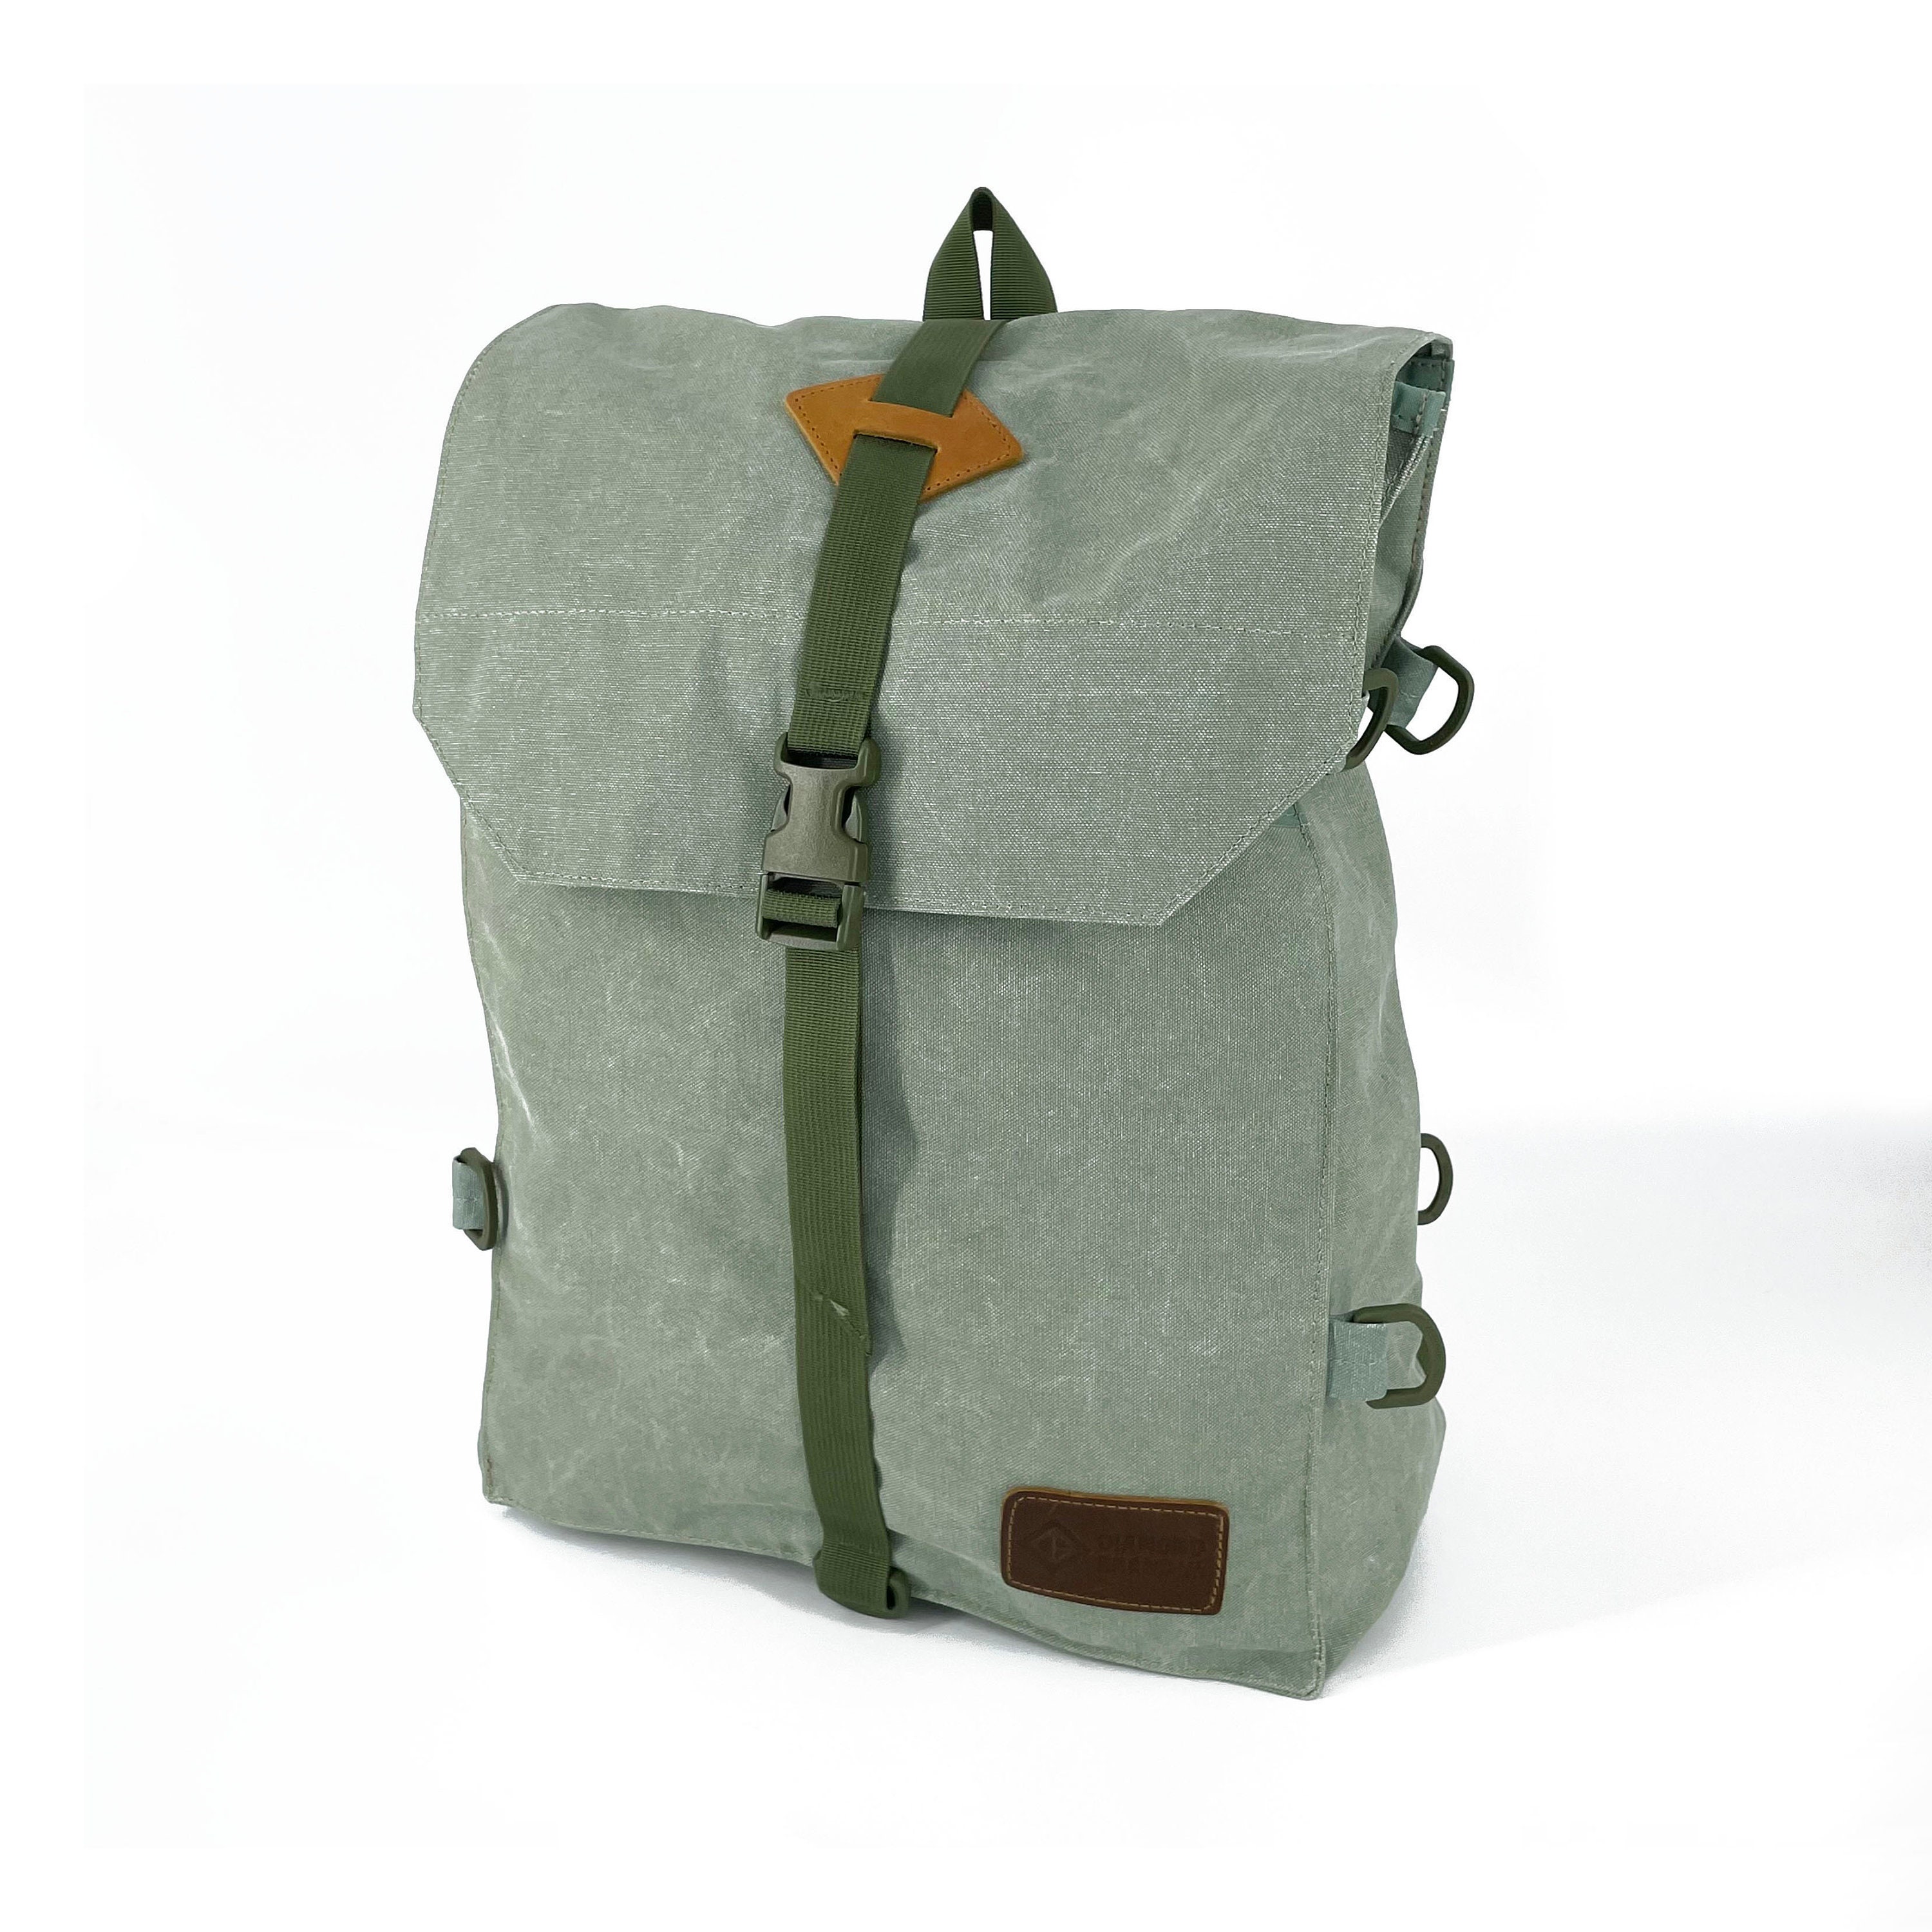 XL Haversack, Bushcraft Haversack, Survival Kit, Waxed Canvas Shoulder Bag,  Hiking Kit, Camping Bag 